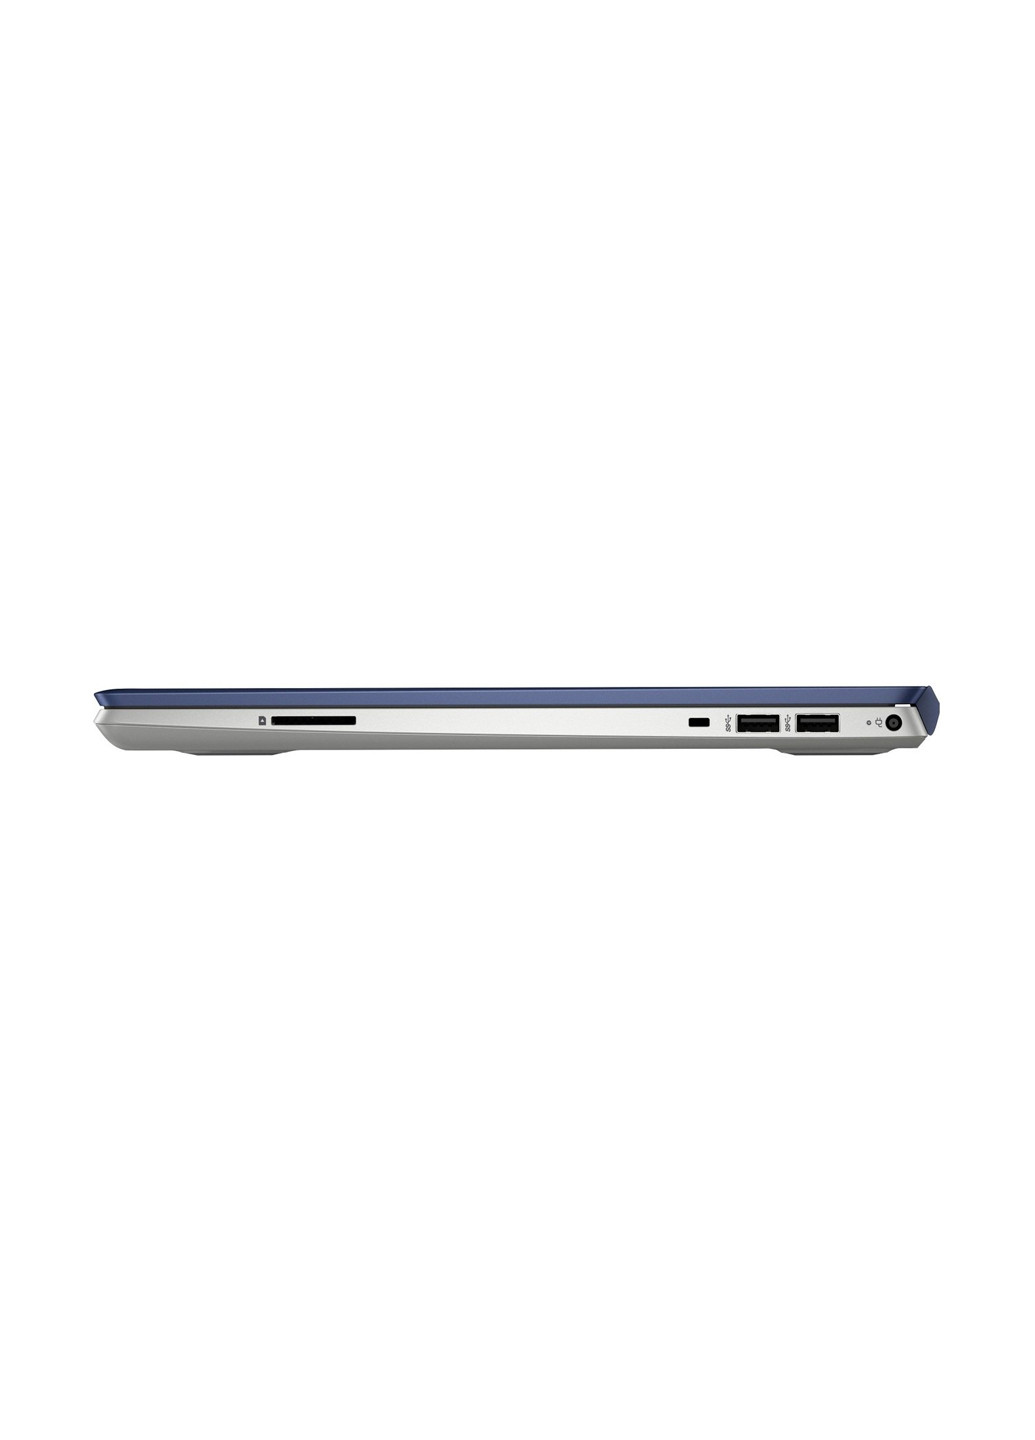 Ноутбук HP Pavilion 15-cs0029ur (4JU88EA) Silver-Blue синий